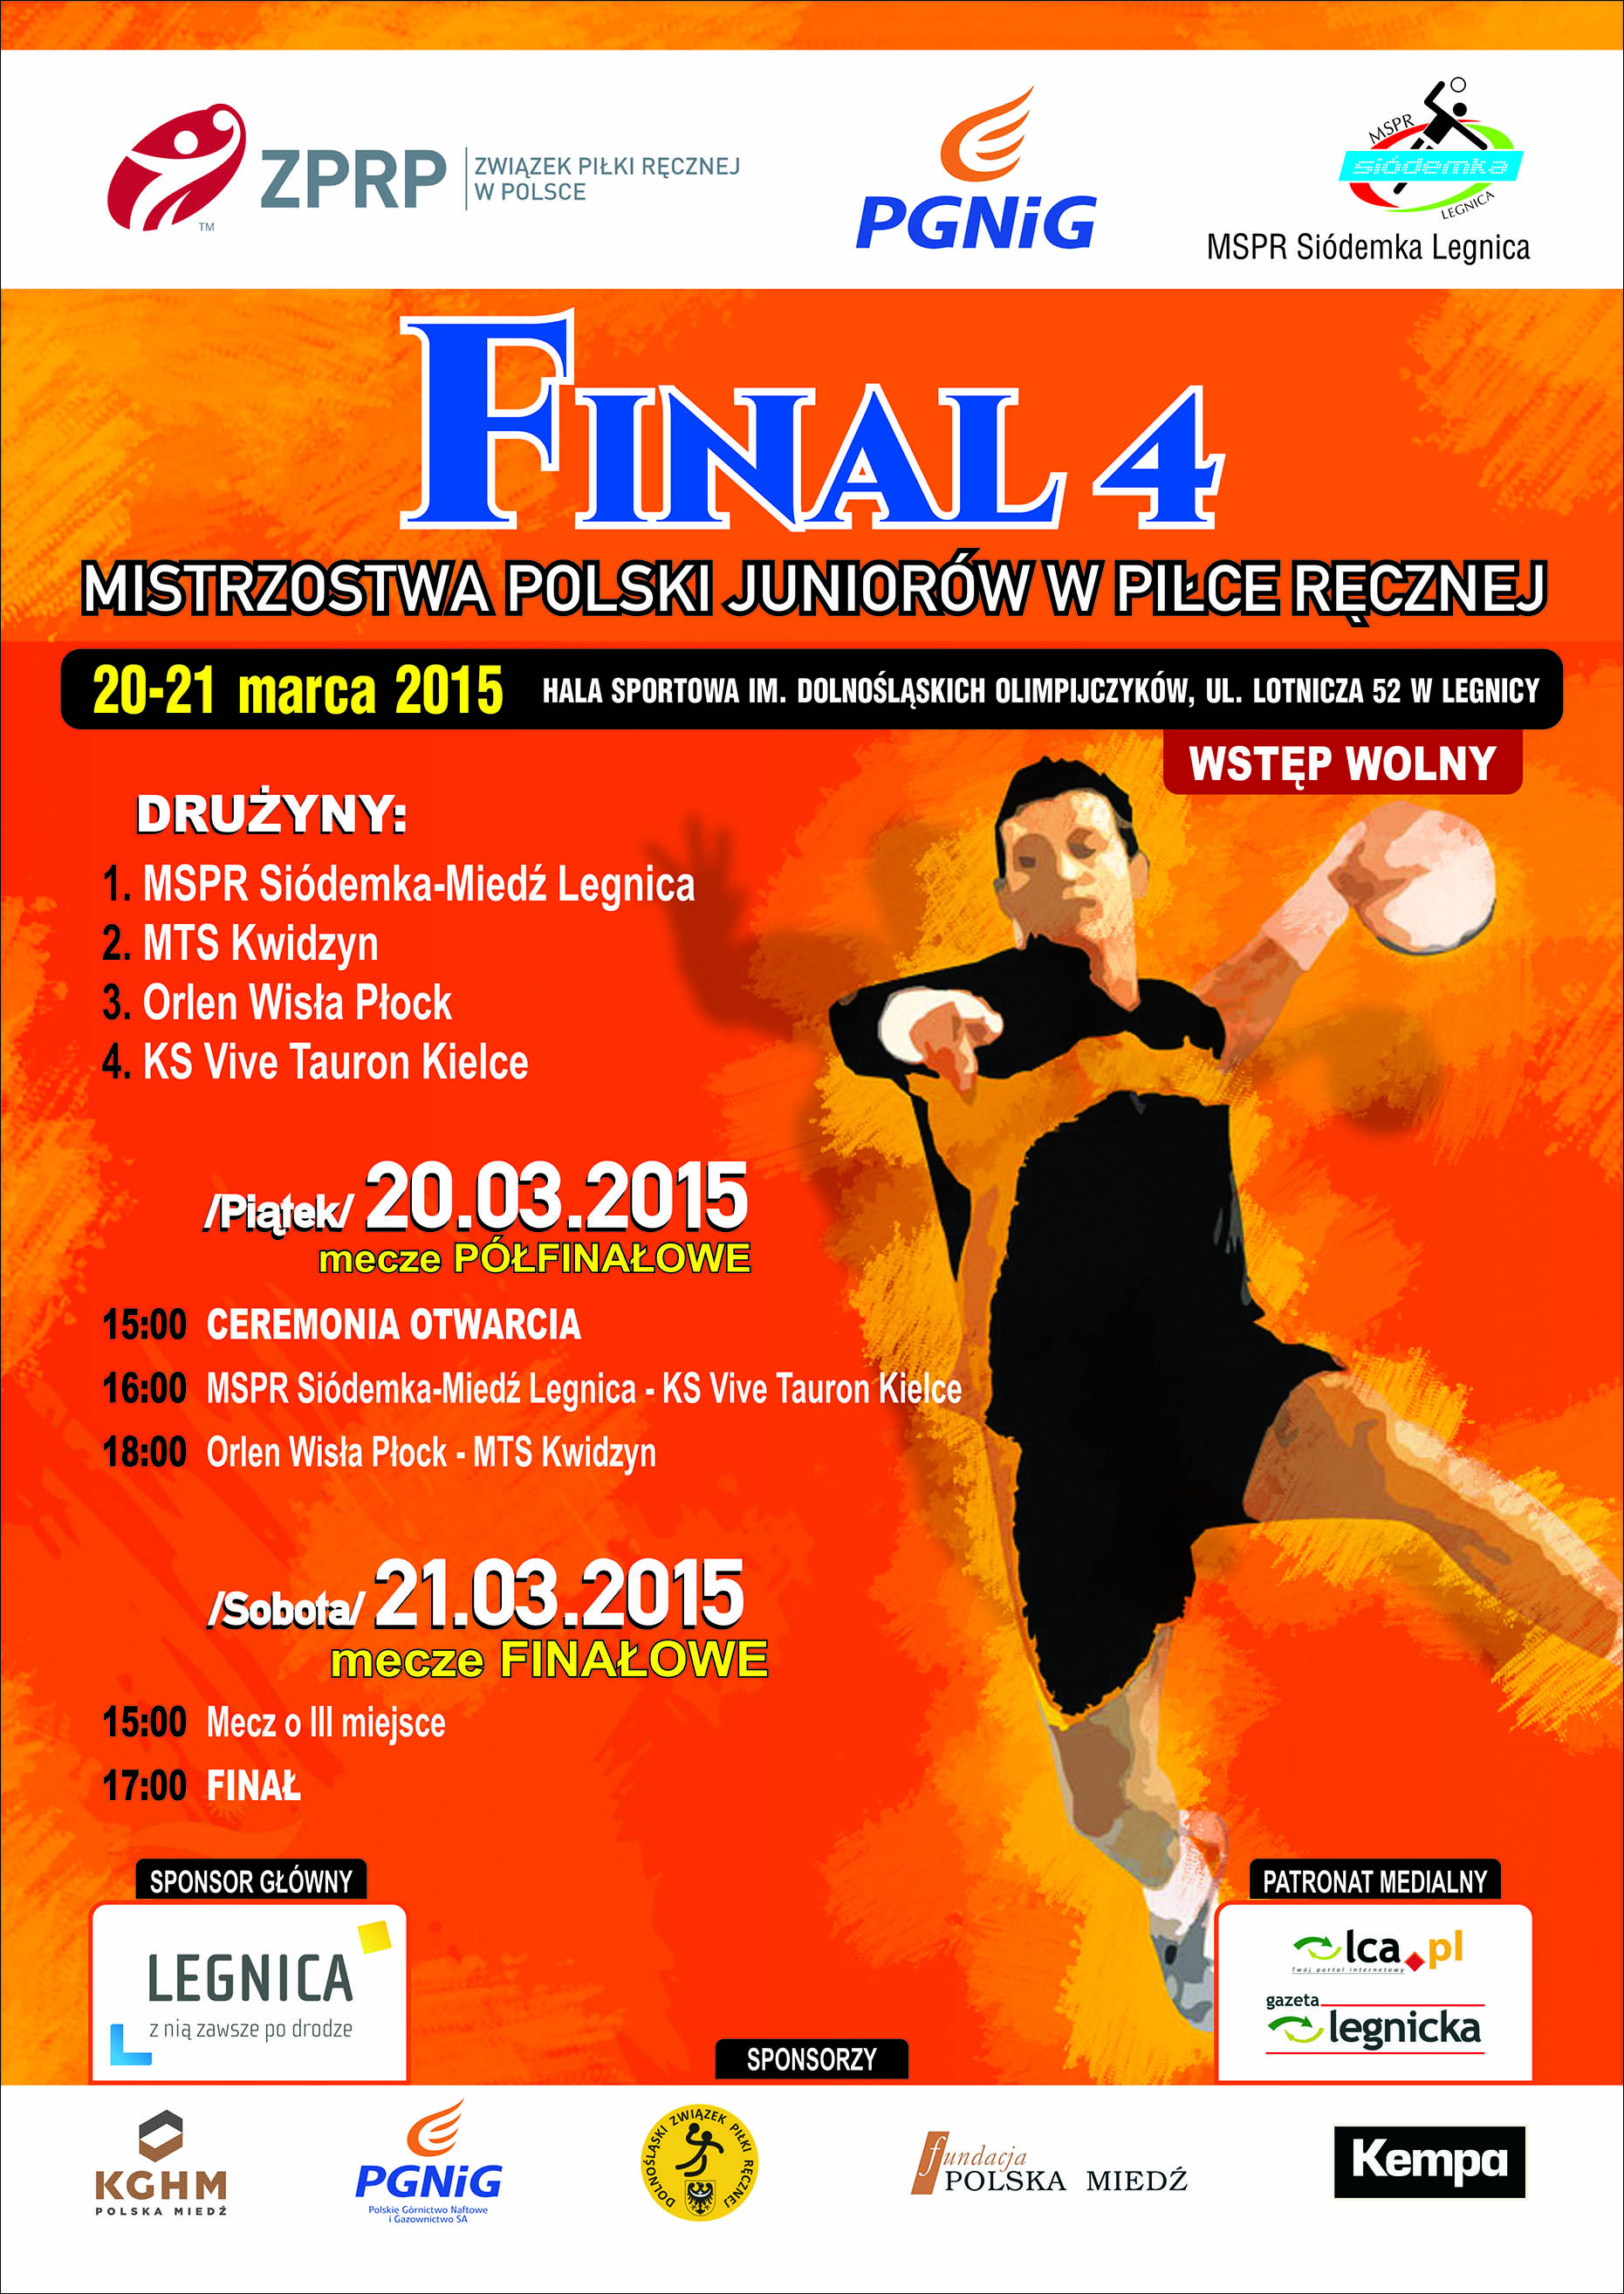 LEGNICA. mpj2015.lca.pl – oficjalna strona Final Four